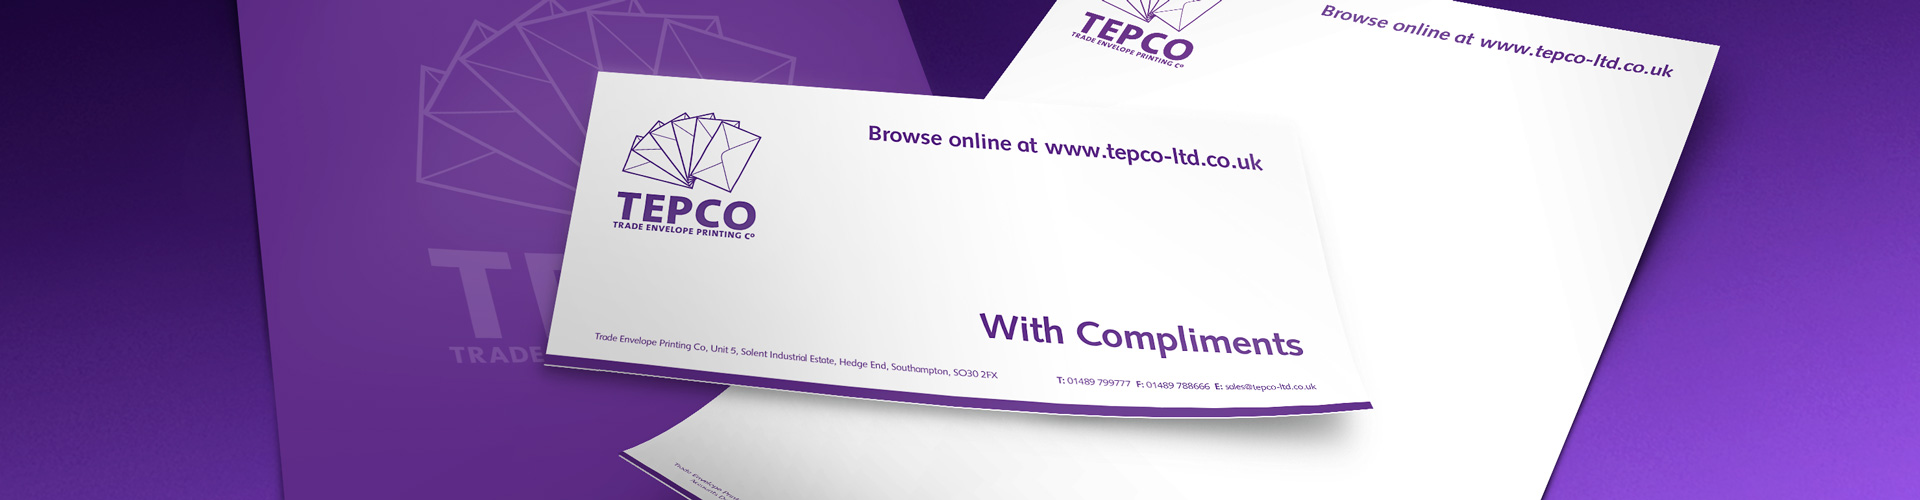 tepco corporate identity